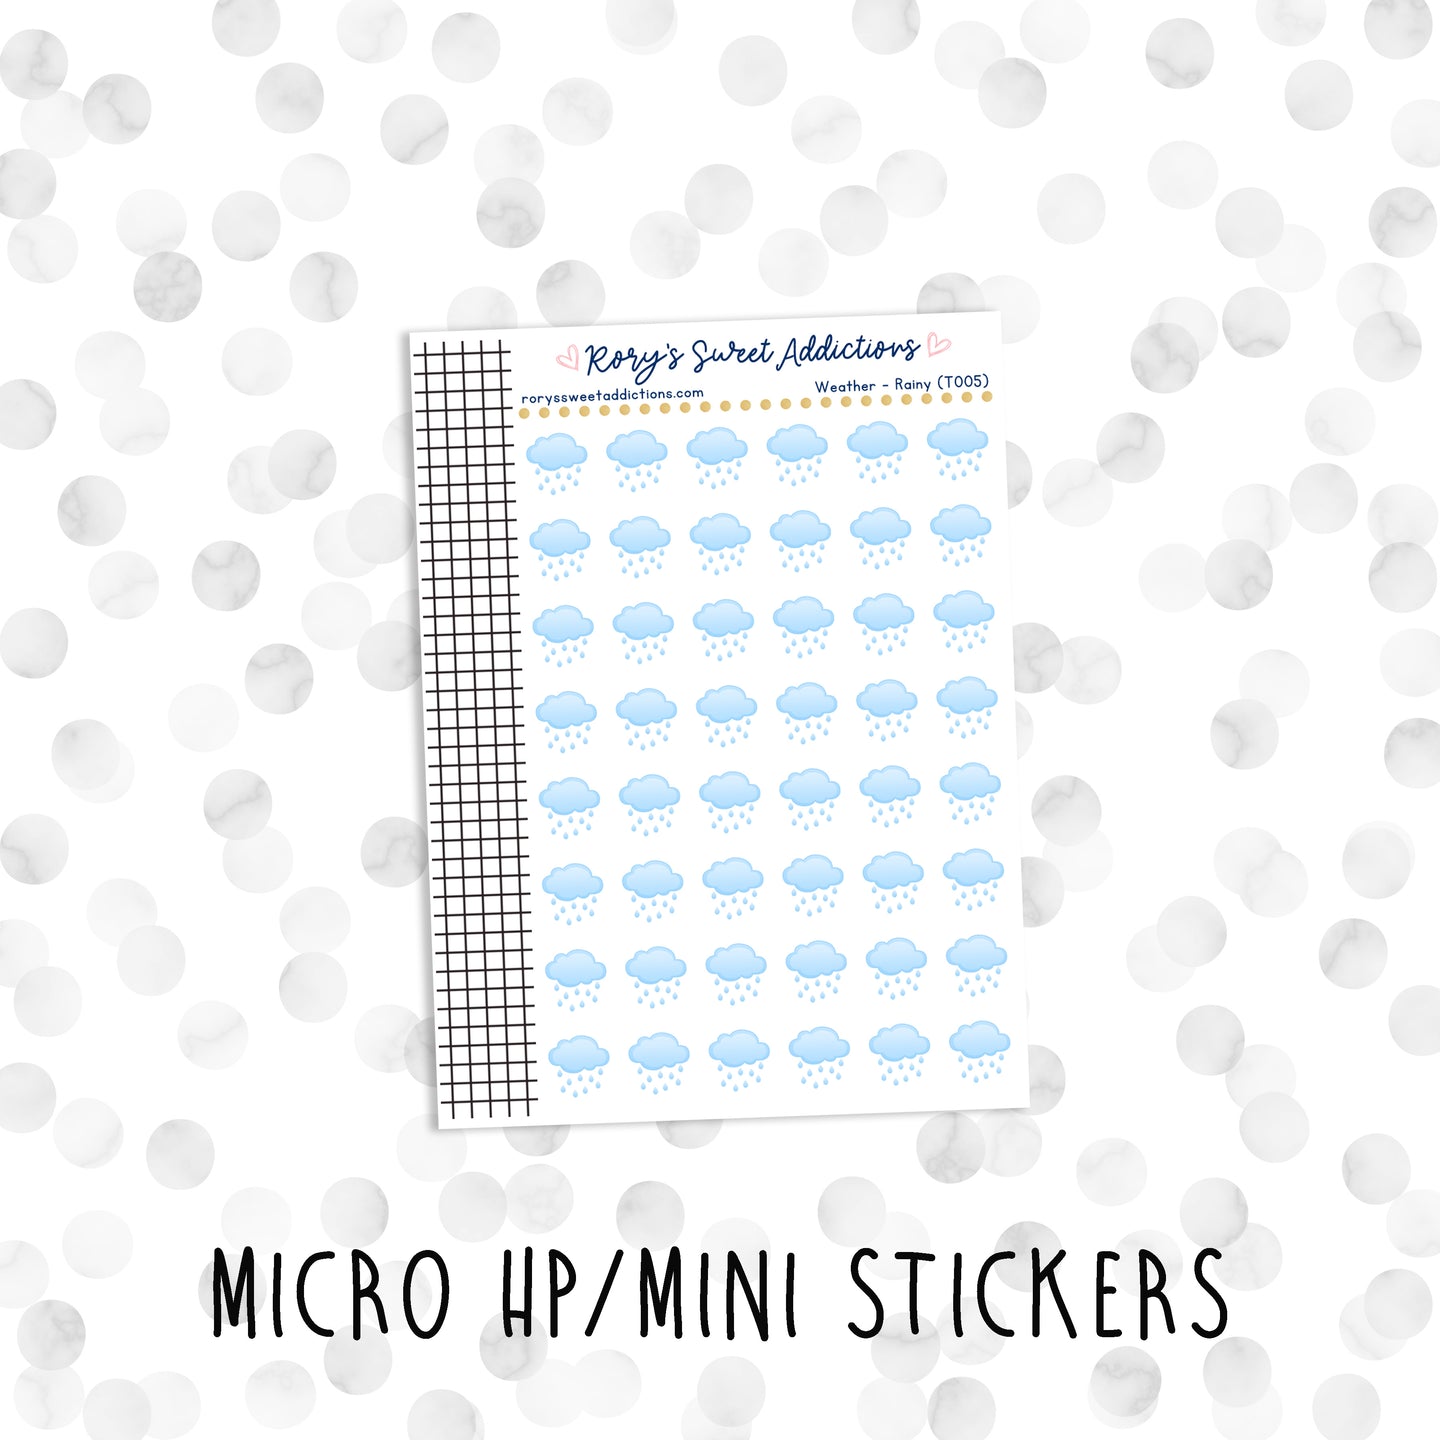 Weather - Rainy // Micro HP - Mini Stickers